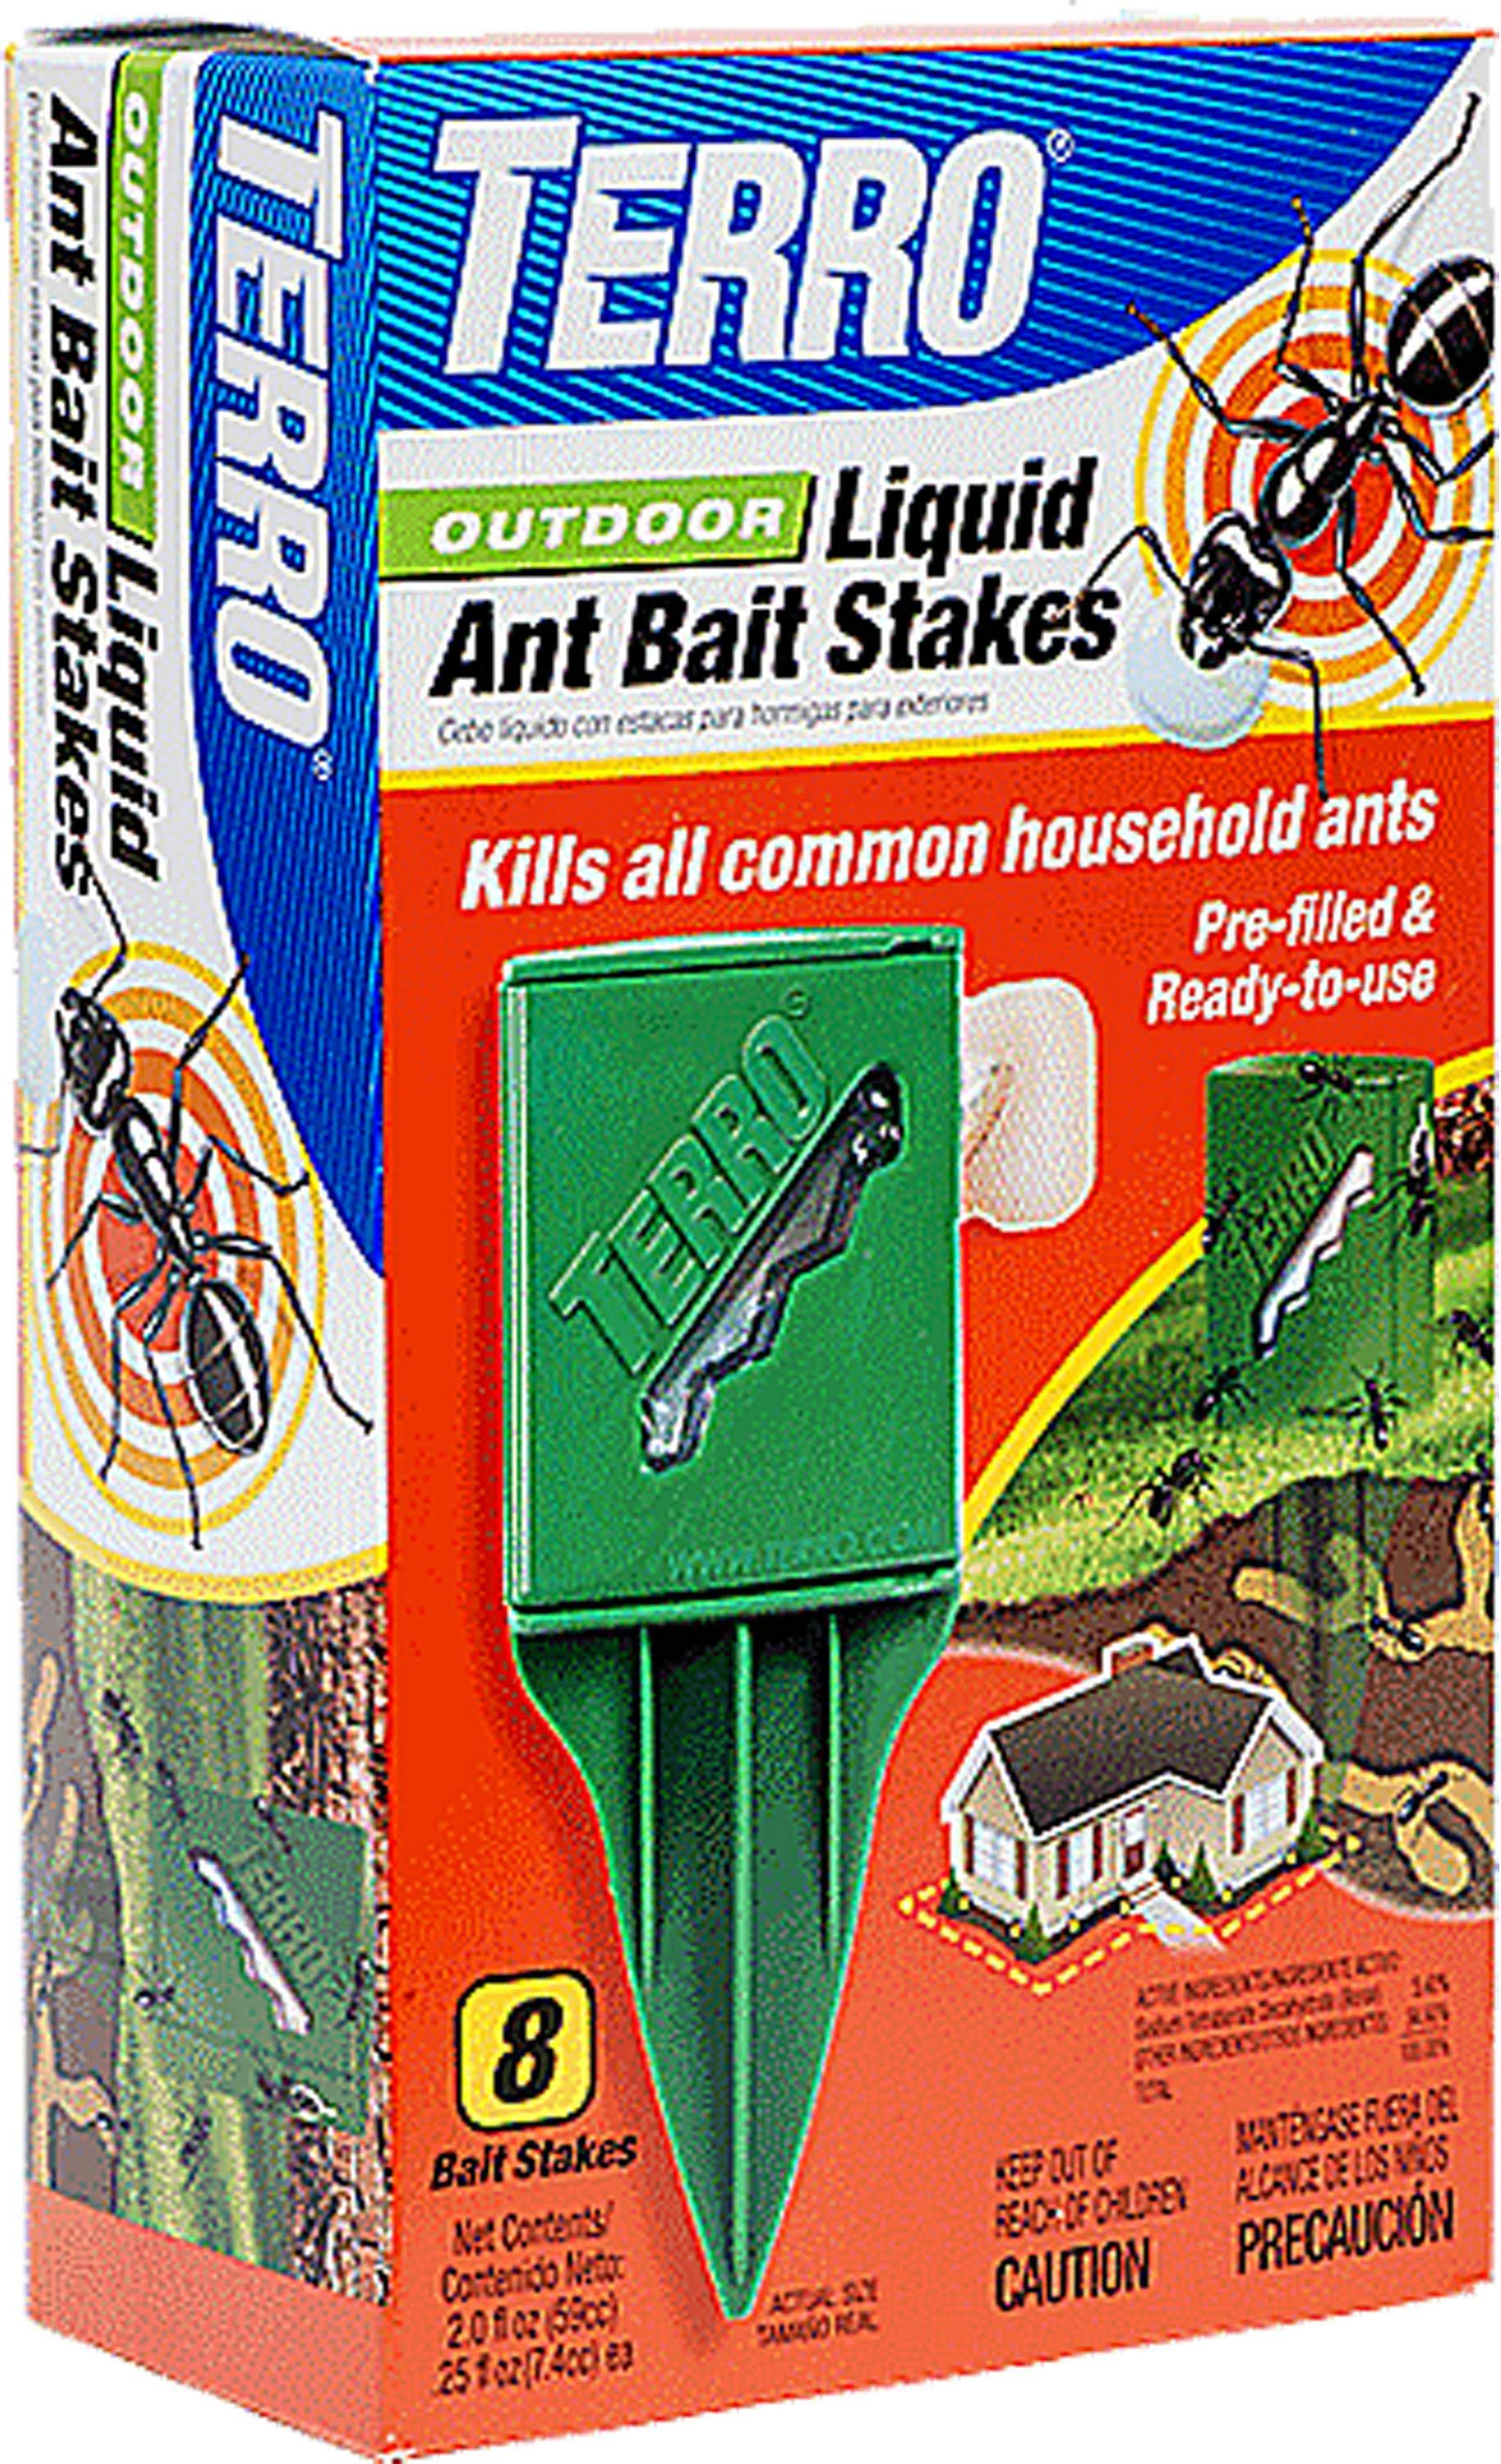 Terro Outdoor Liquid Ant Bait Stakes - x8